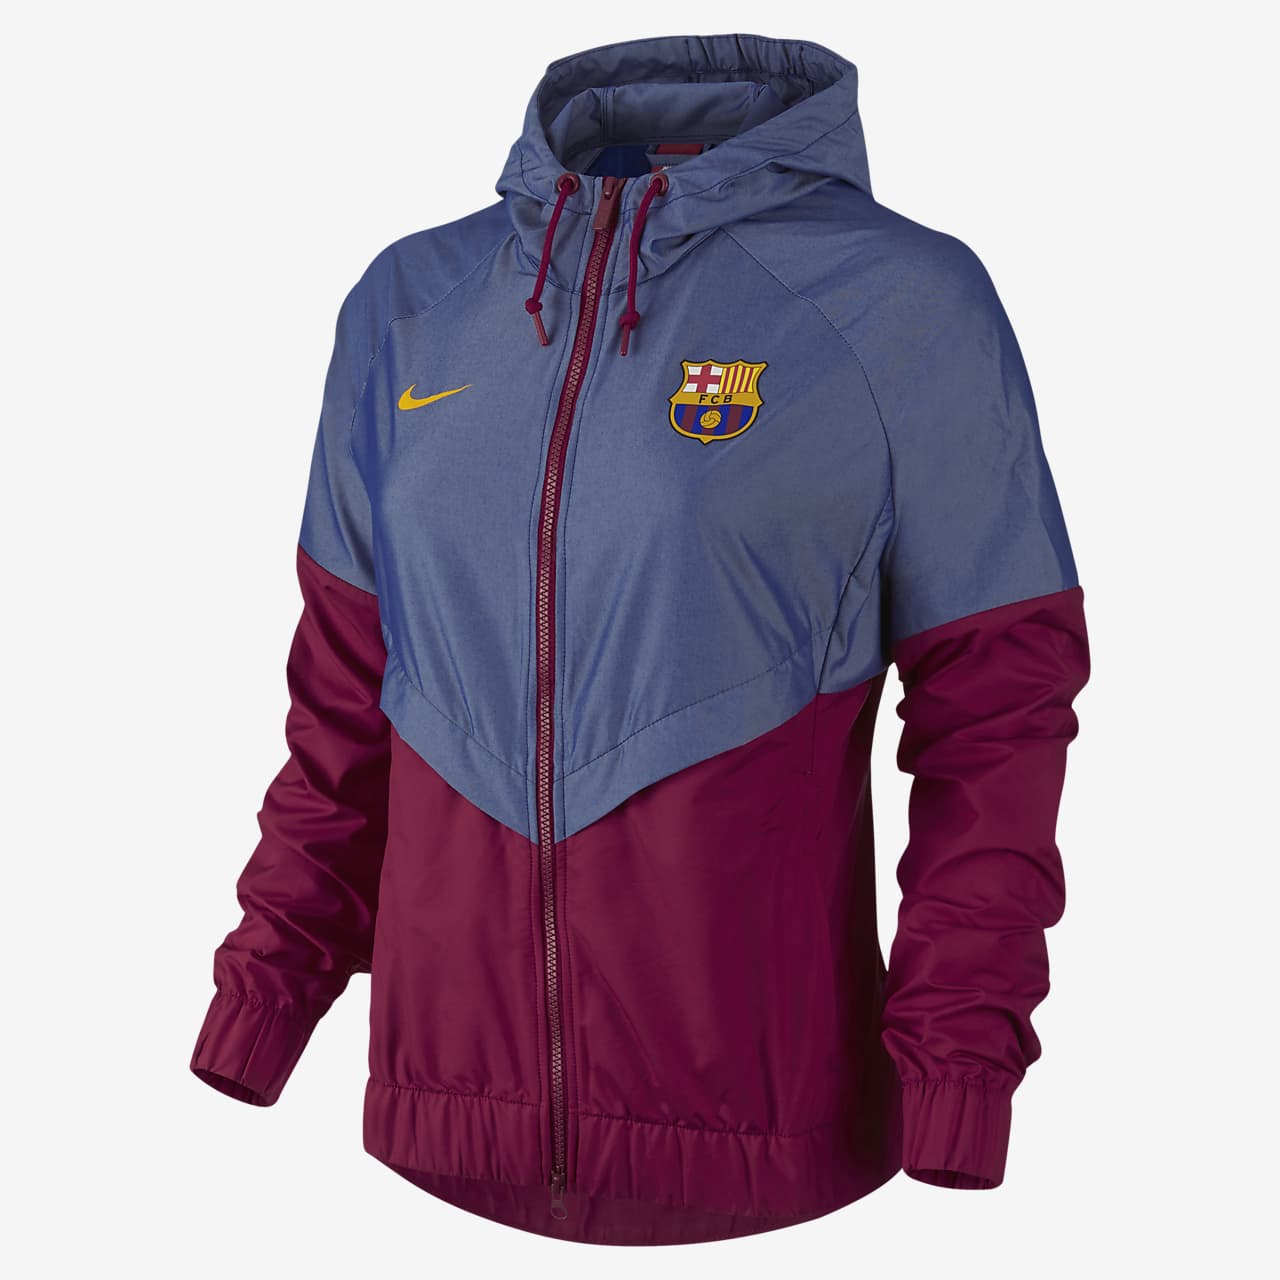 Geurloos zegevierend In FC Barcelona Authentic Windrunner Women's Jacket. Nike LU